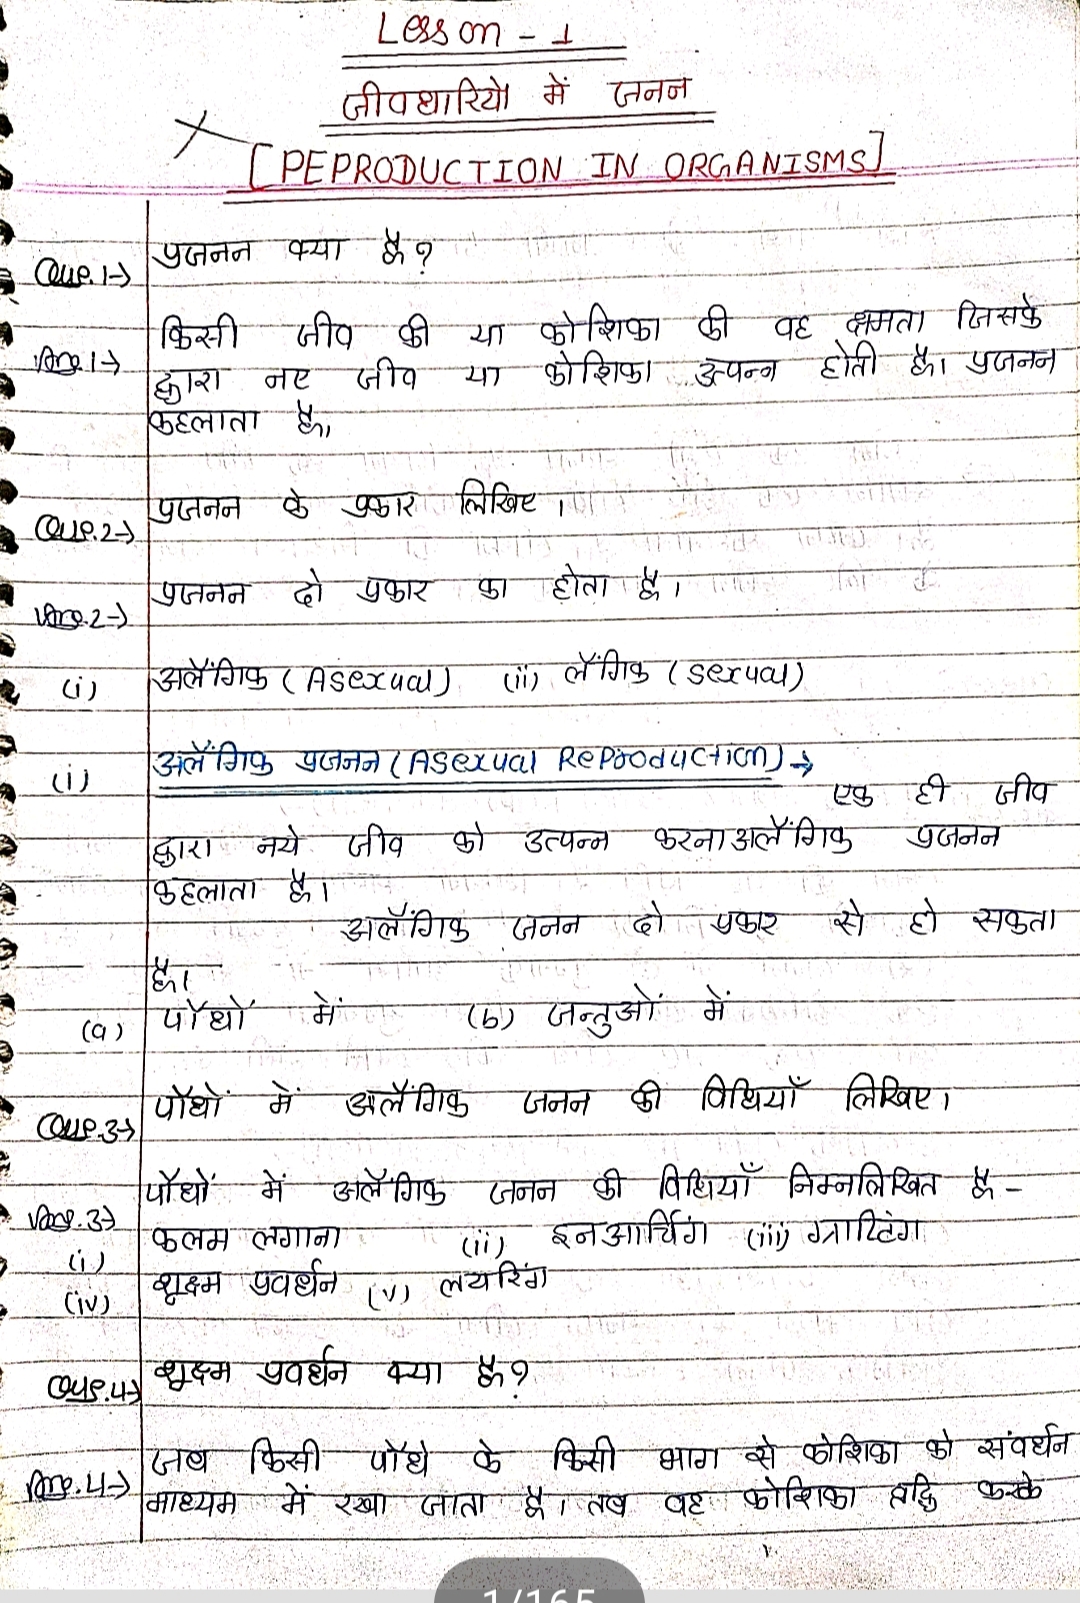 MP board 12th Biology Notes PDF Download | जीव विज्ञान कक्षा 12 नोट्स pdf MPBSE, 12th biology notes in hindi, क्लास ट्वेल्थ बायोलॉजी नोट्स पीडीएफ